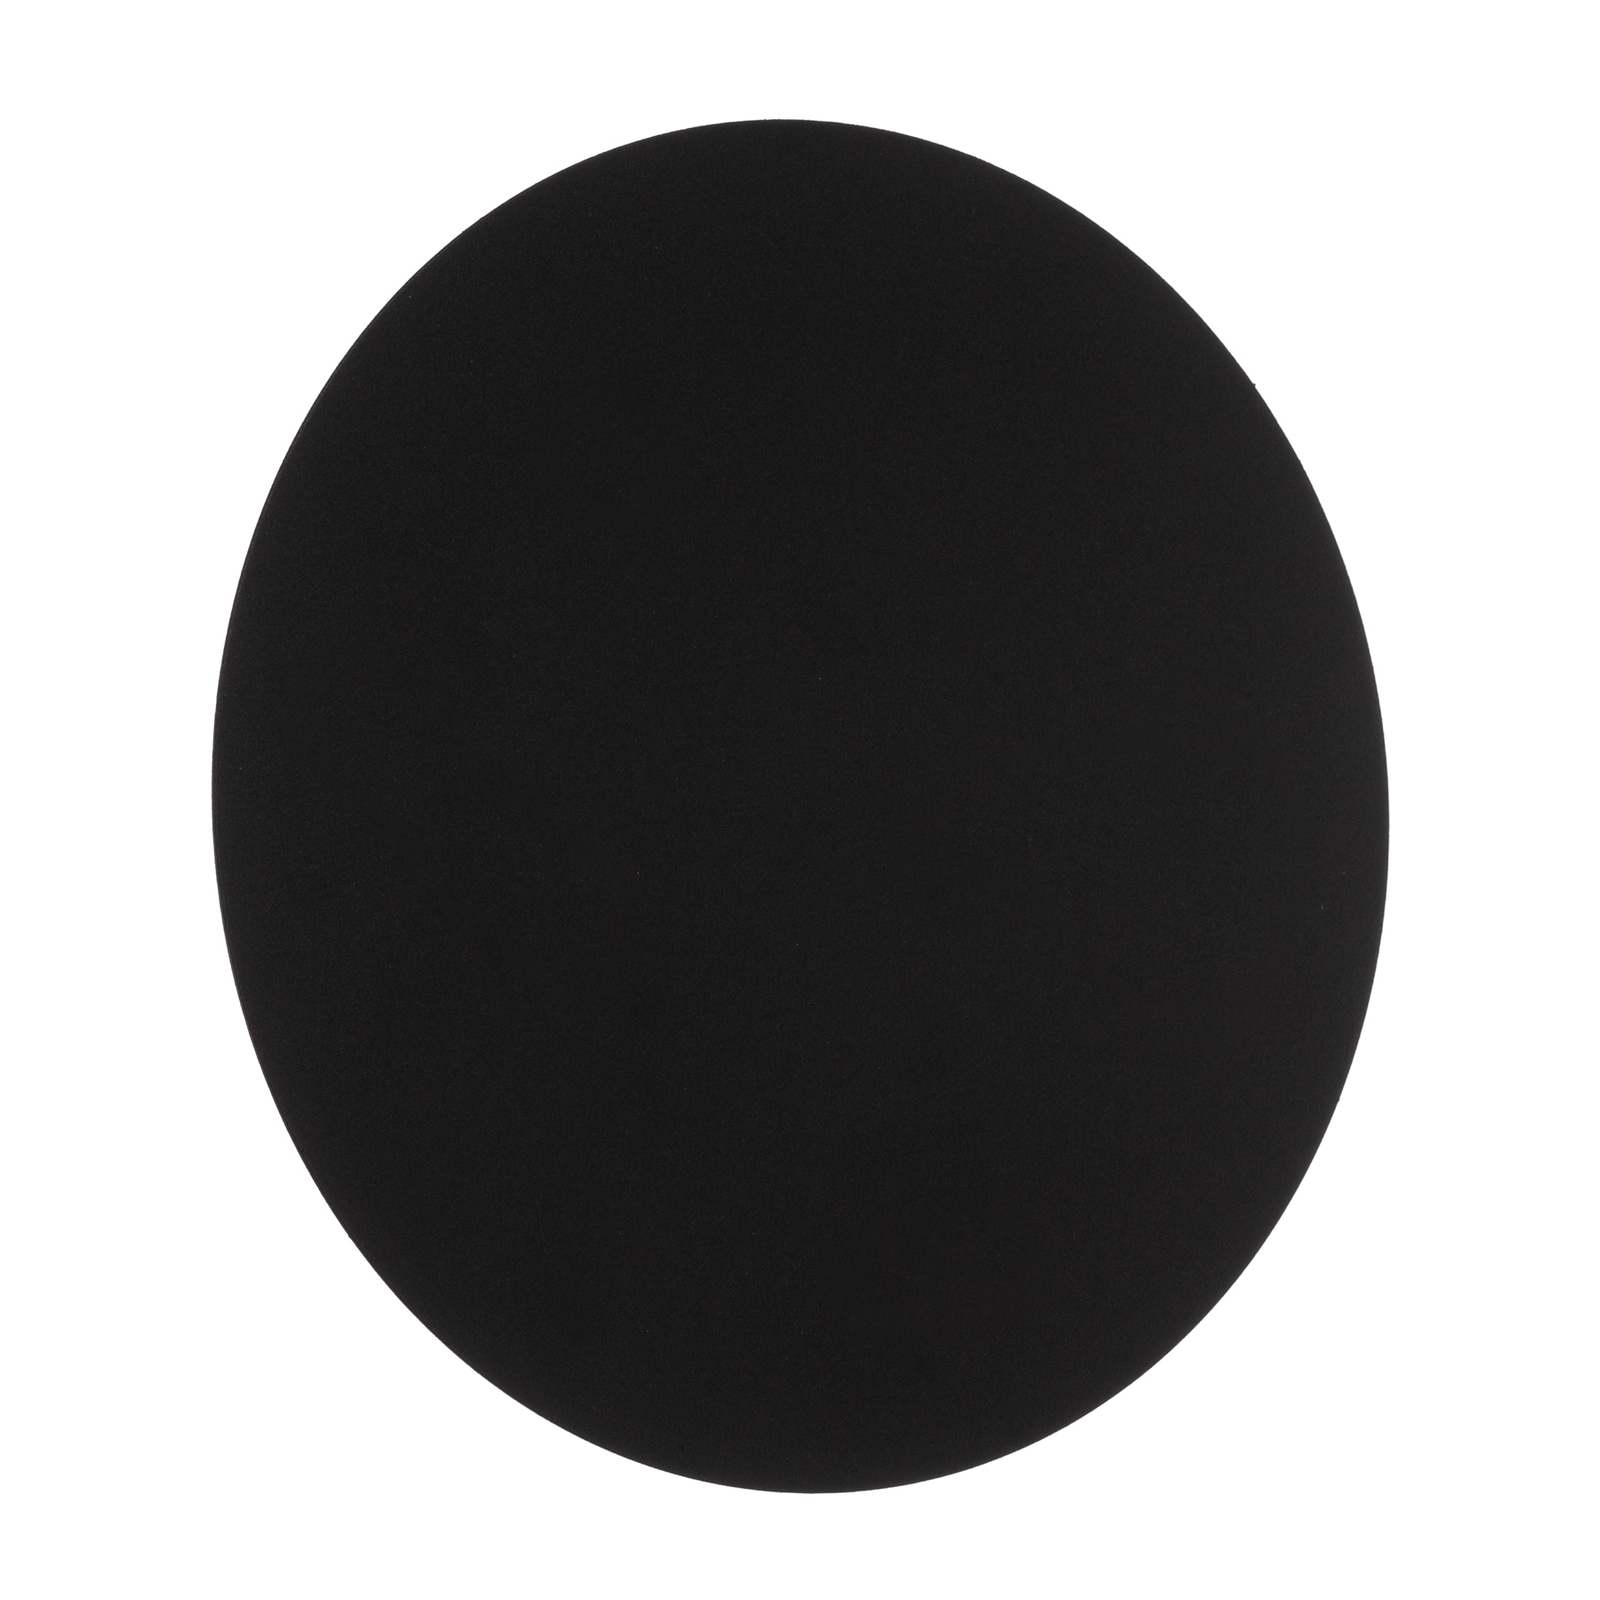 Lunia New wandlamp, zwart, Ø 30 cm